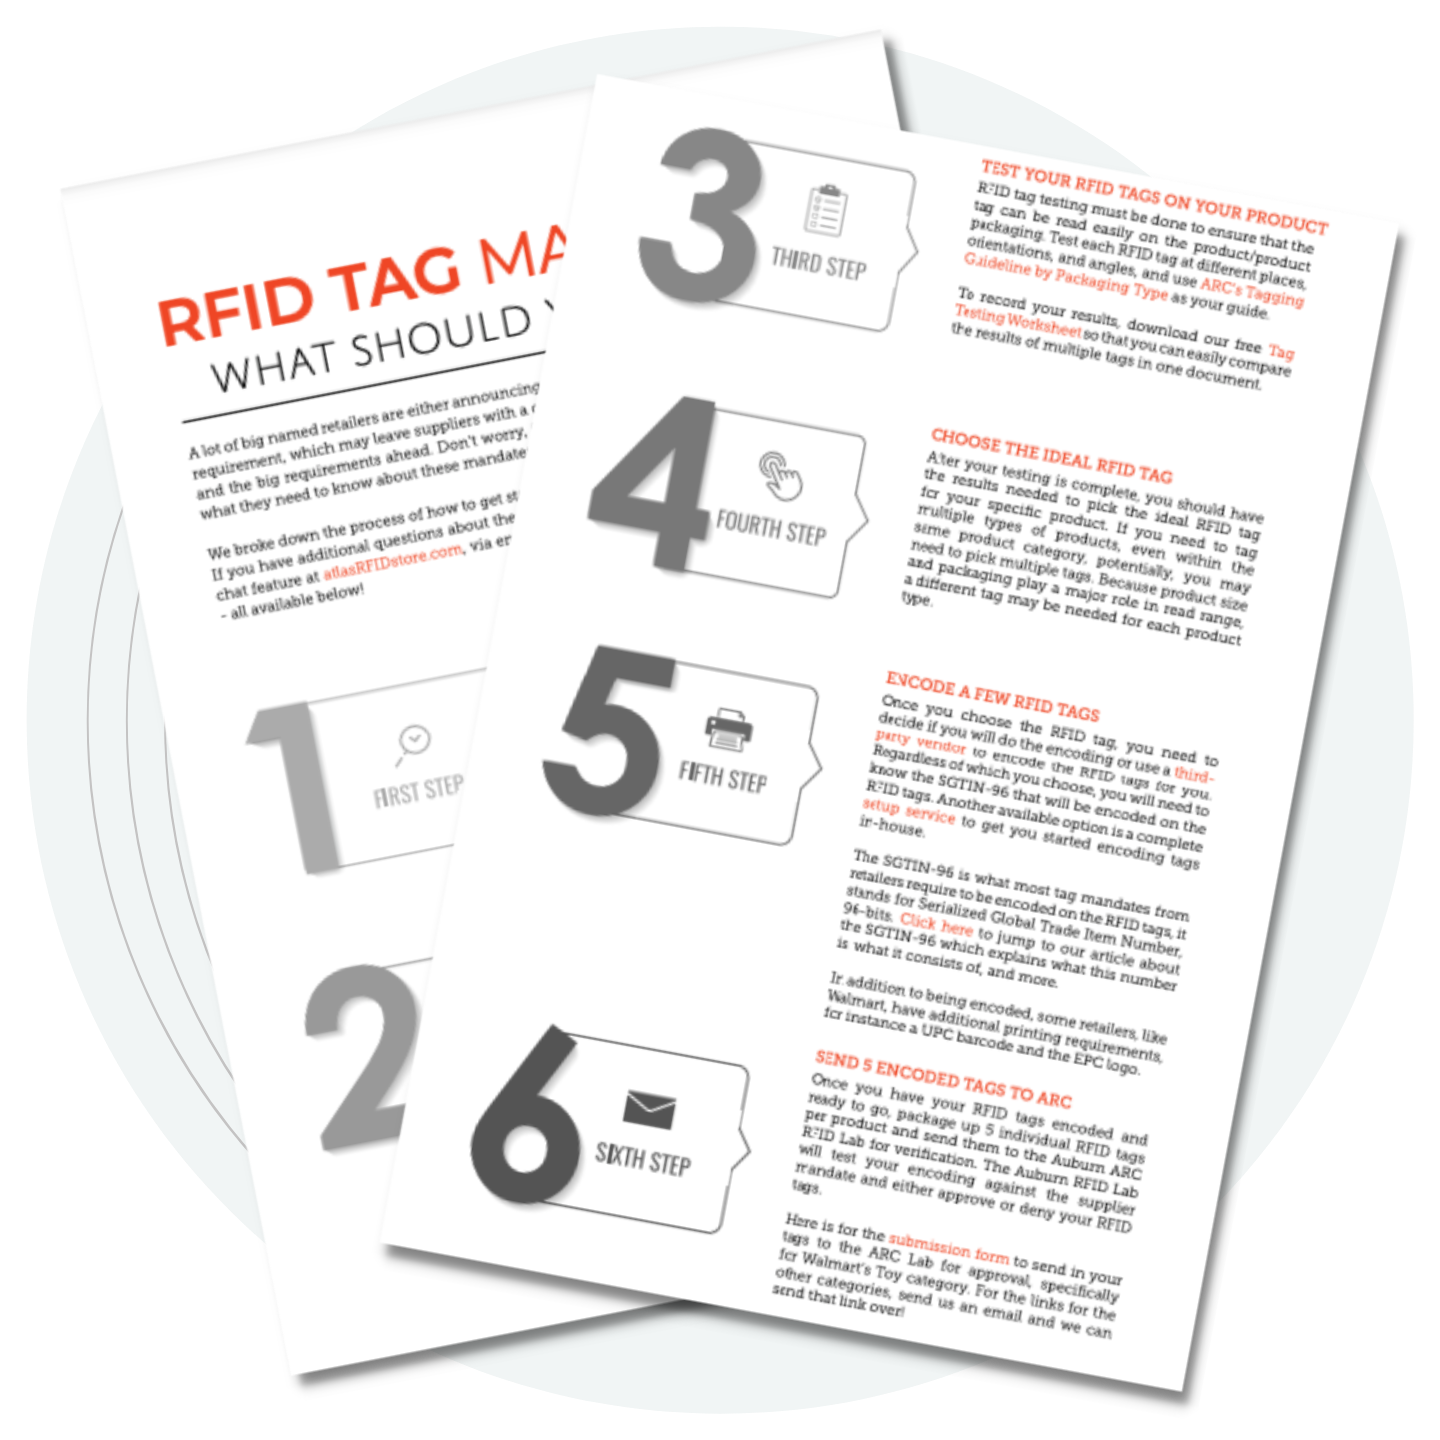 RFID Tag Mandates Infographic